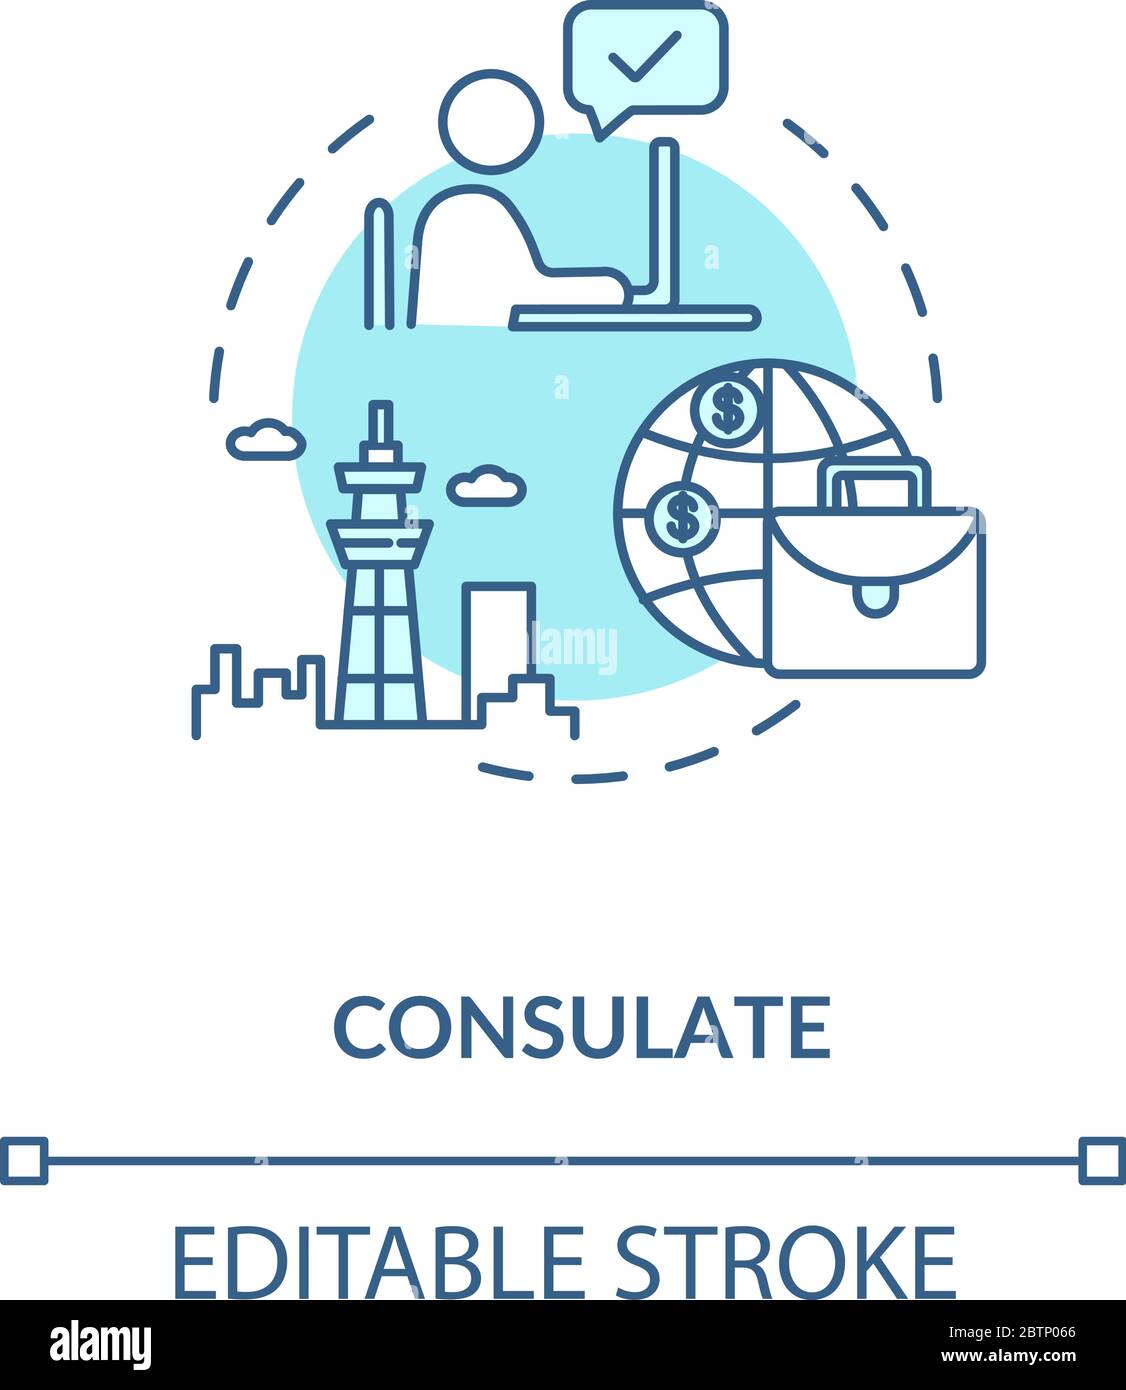 Consulate concept icon Stock Vector